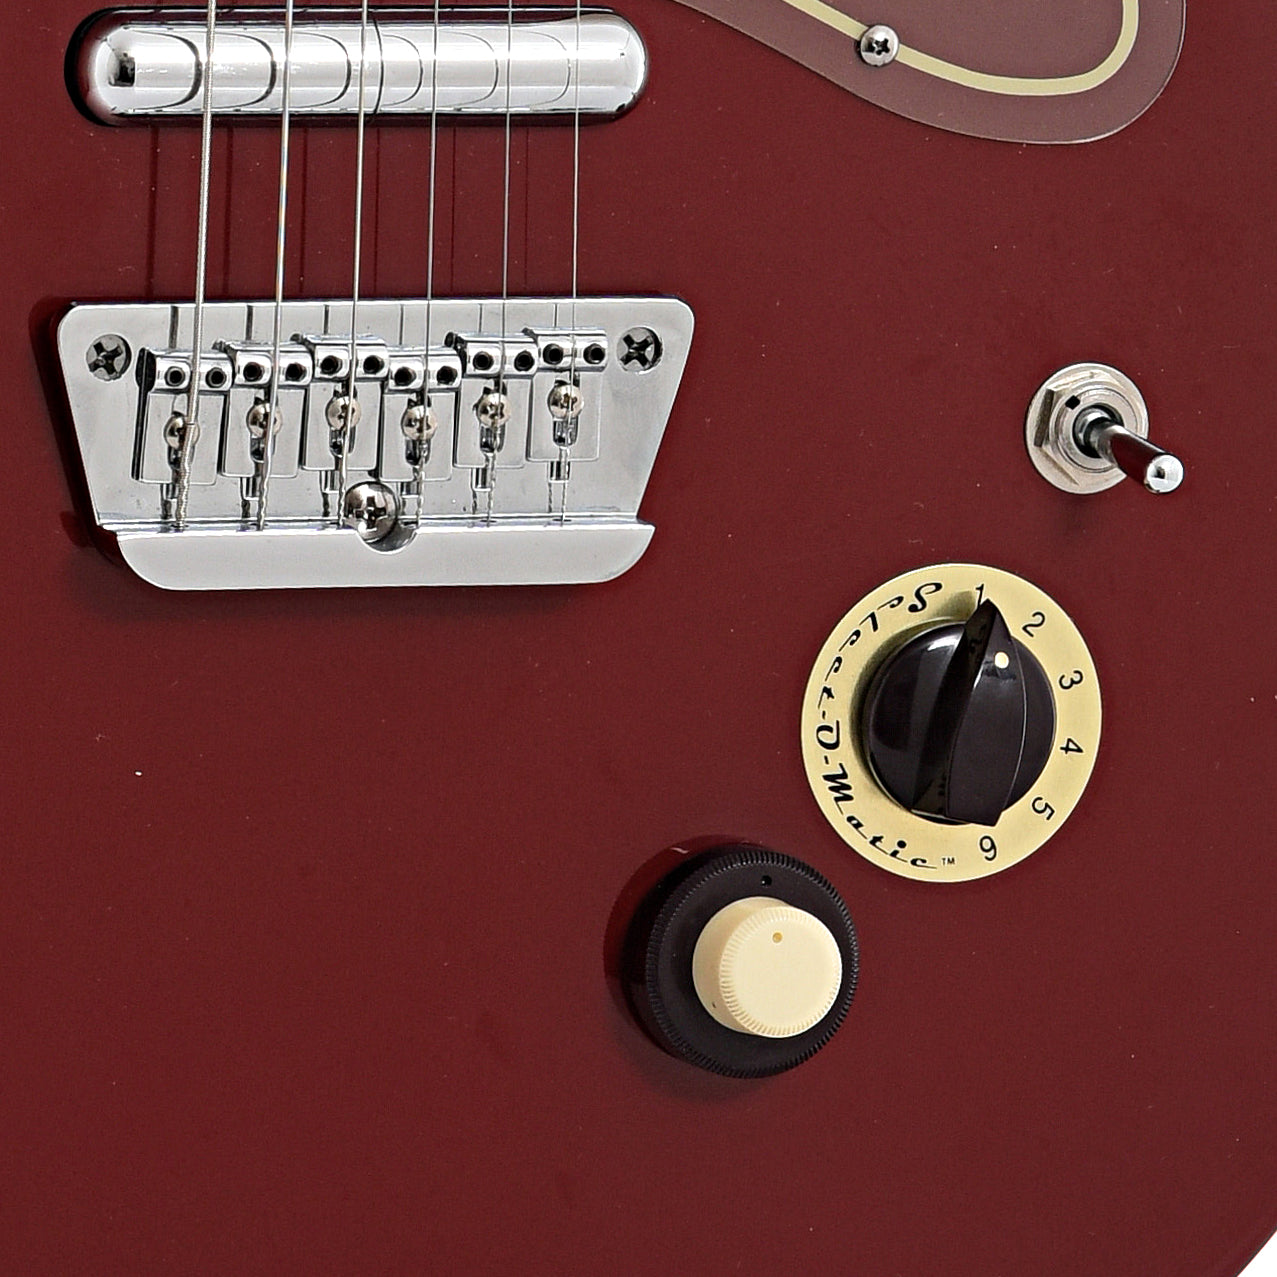 Bridge and controls of Danelectro 56 - U3 Reissue Electric Guitar (2000s)